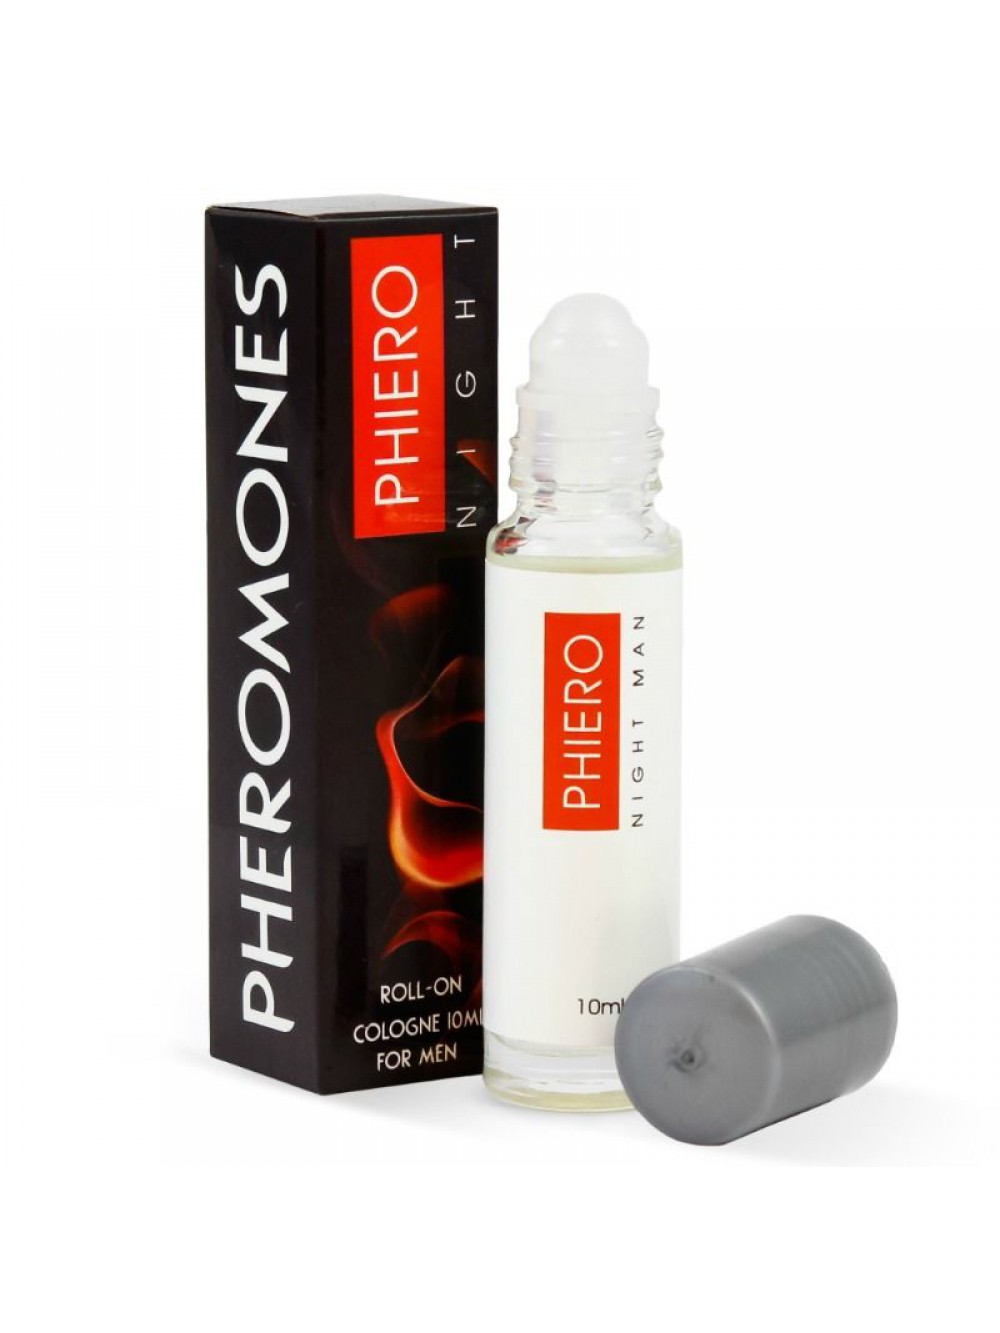 PHIERO NIGHT MAN Pheromones perfume in roll